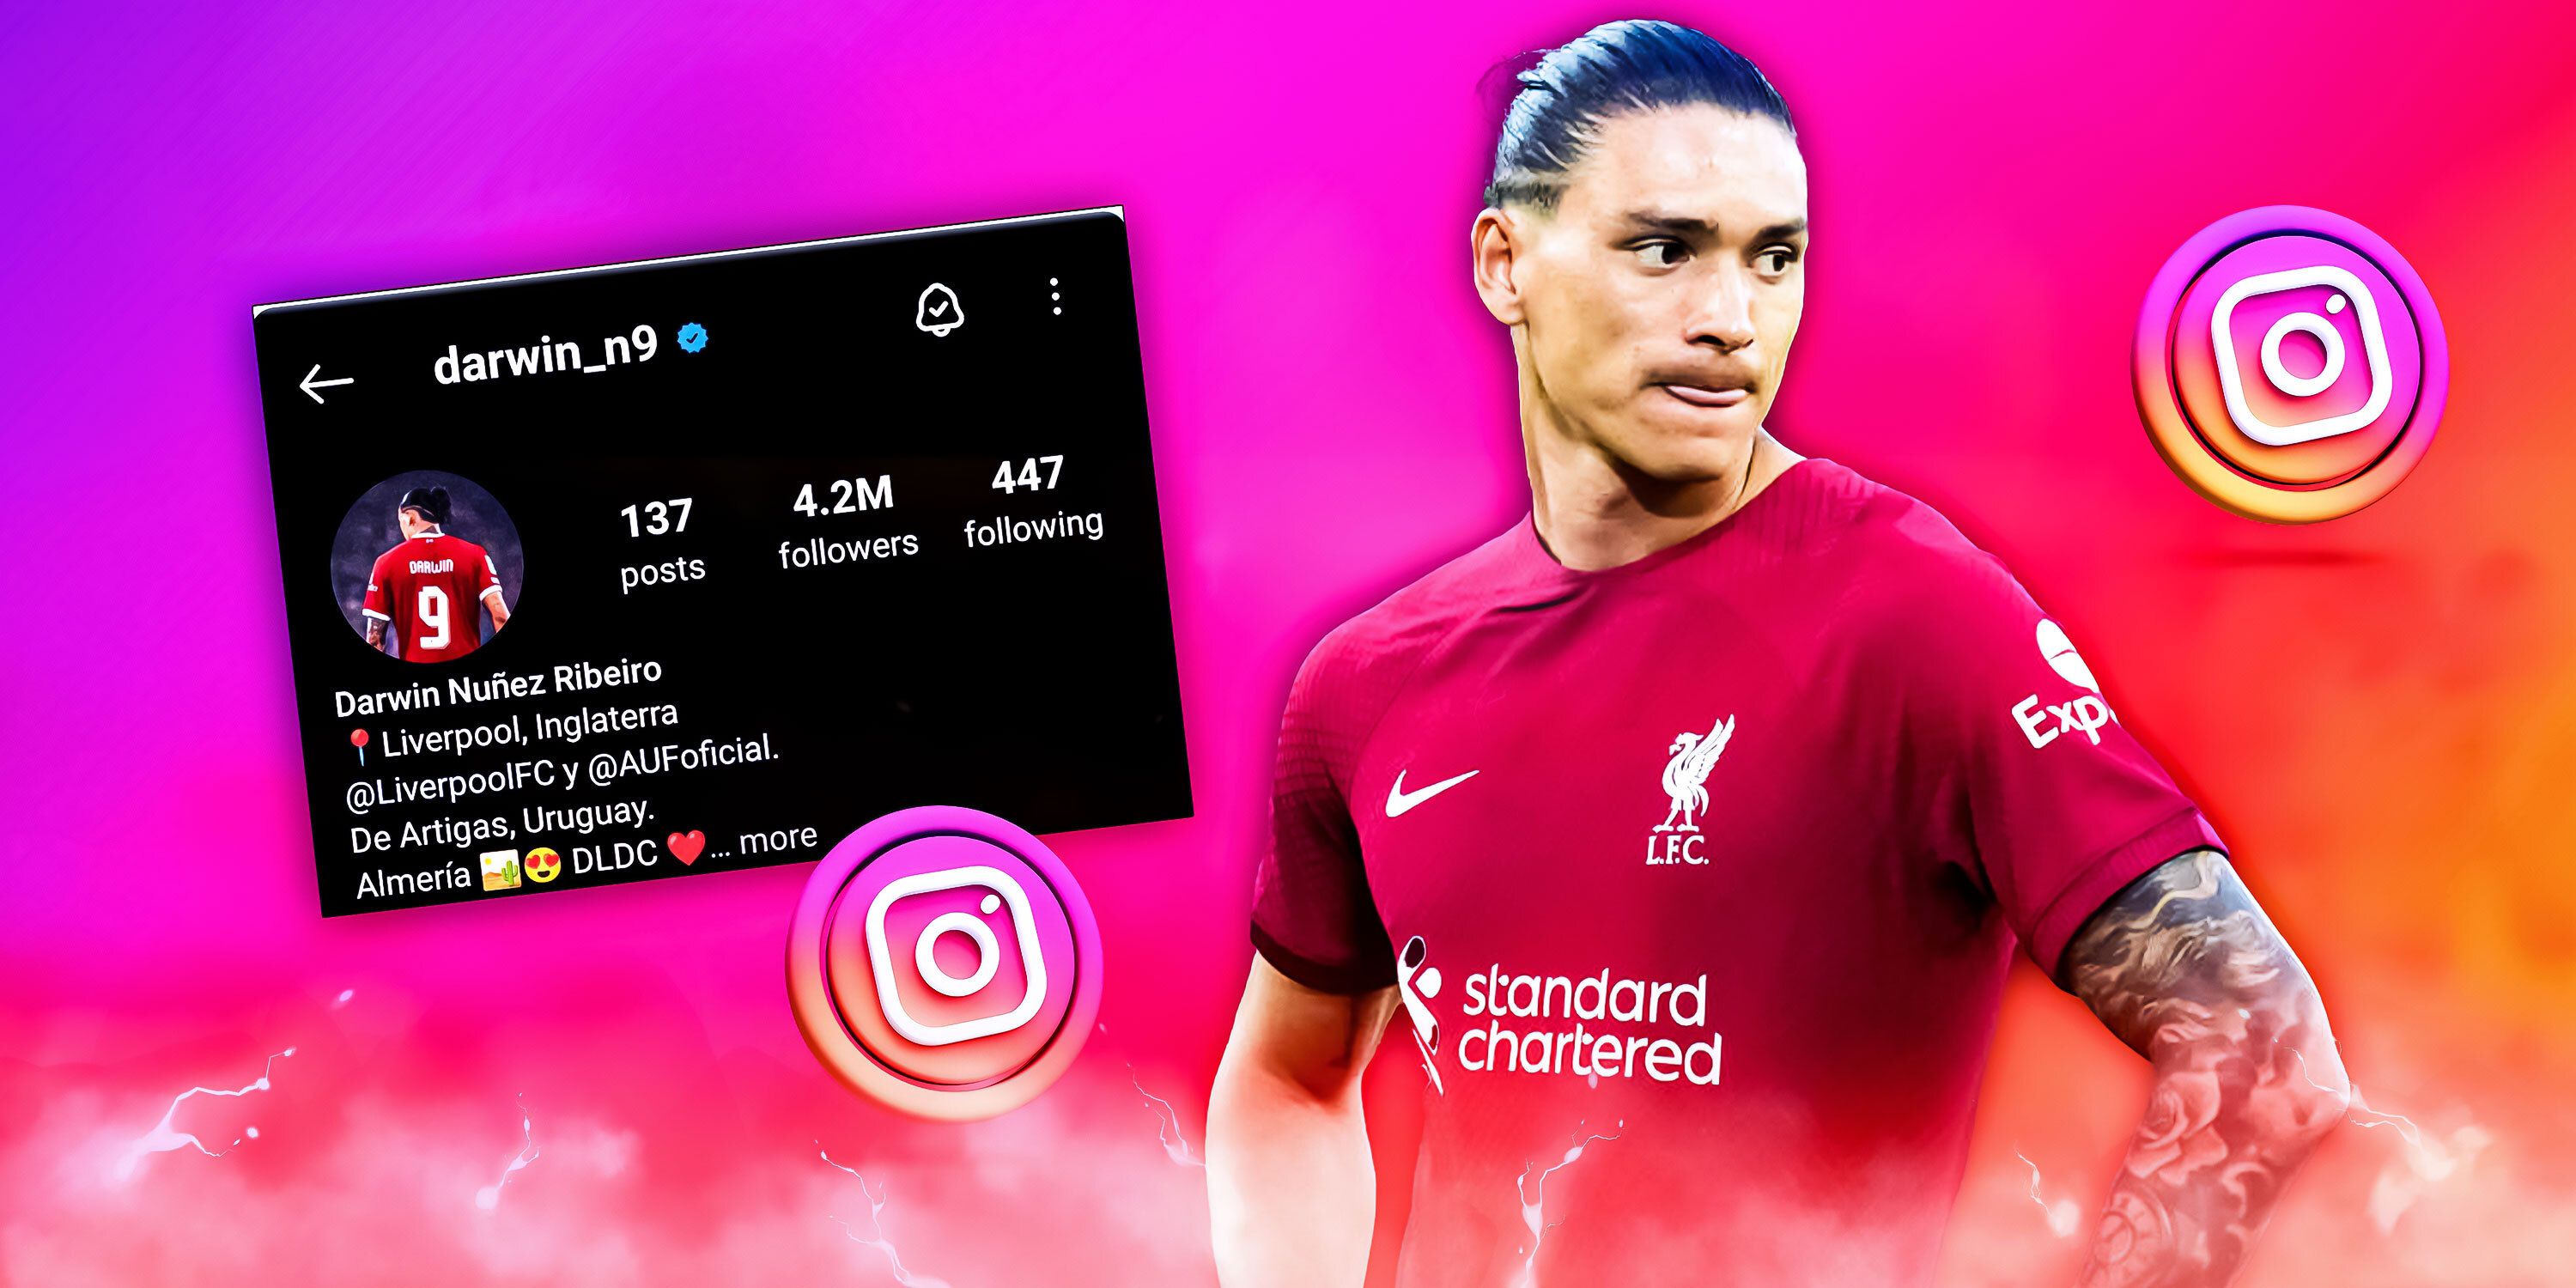 Darwin Nunez's Instagram Activity Suggests Liverpool Exit Will Benefit All